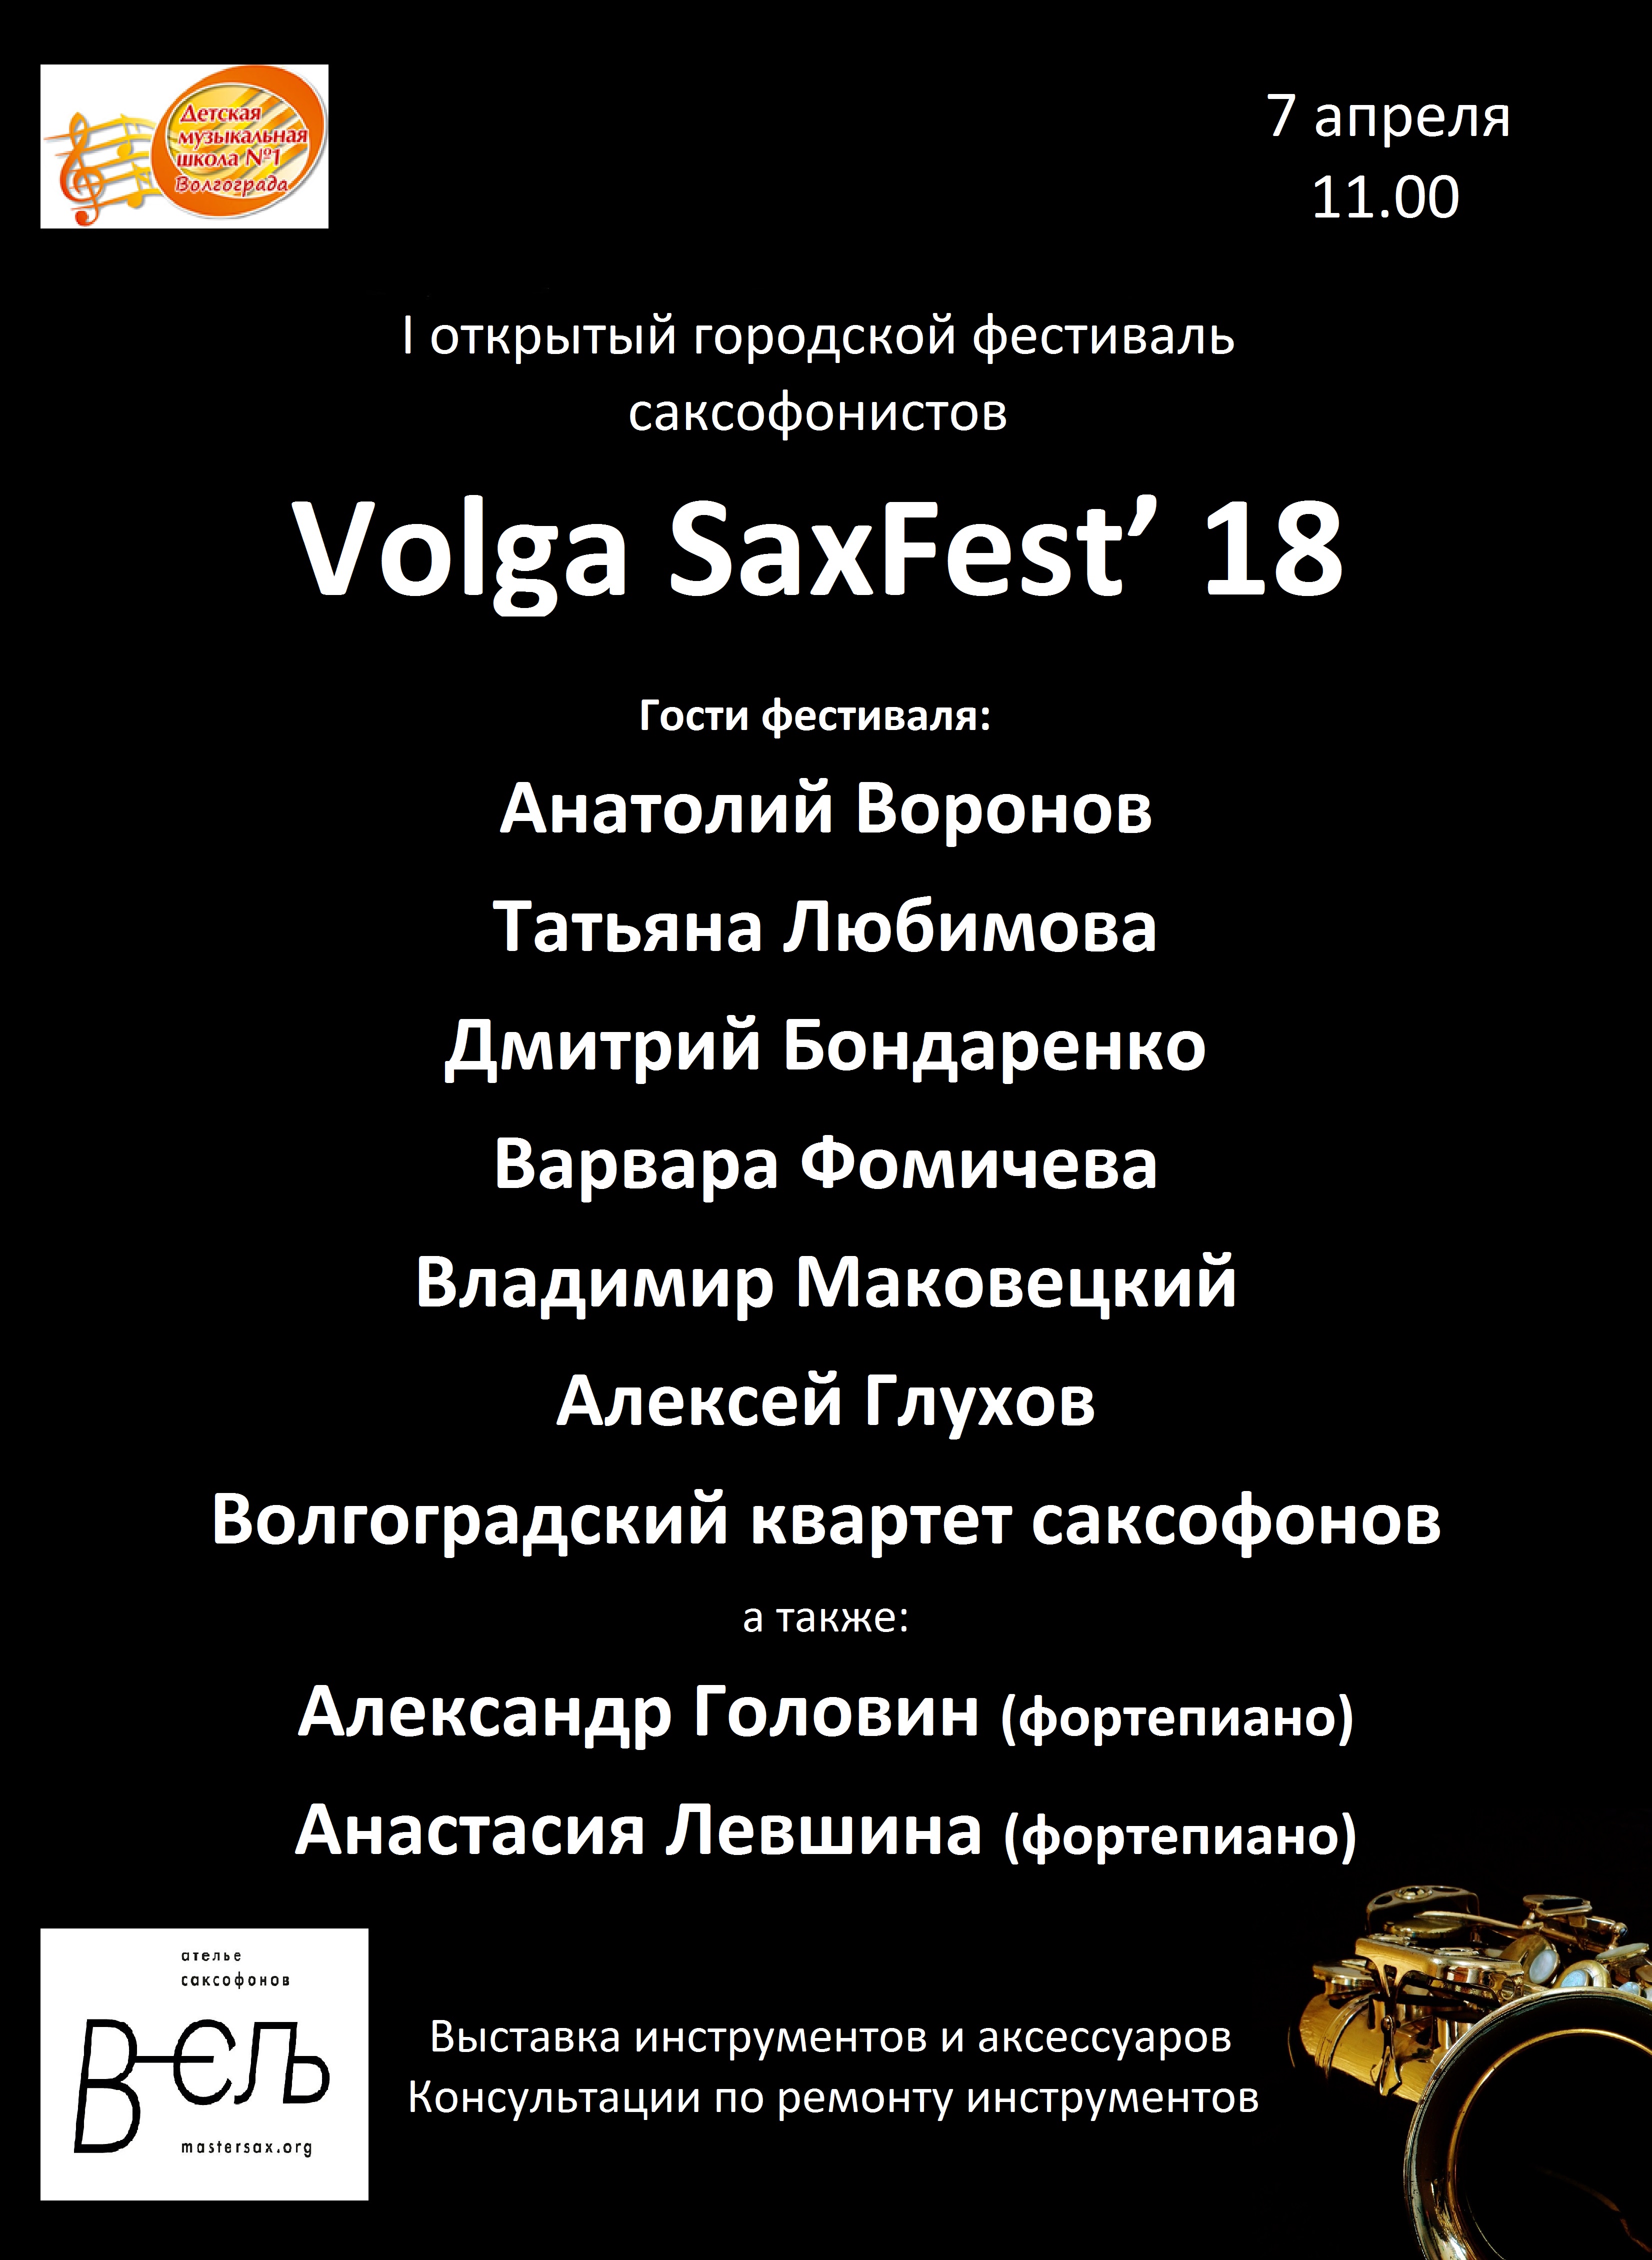 ФЕСТИВАЛЬ САКСОФОННОЙ МУЗЫКИ VolgaSaxFest ’18